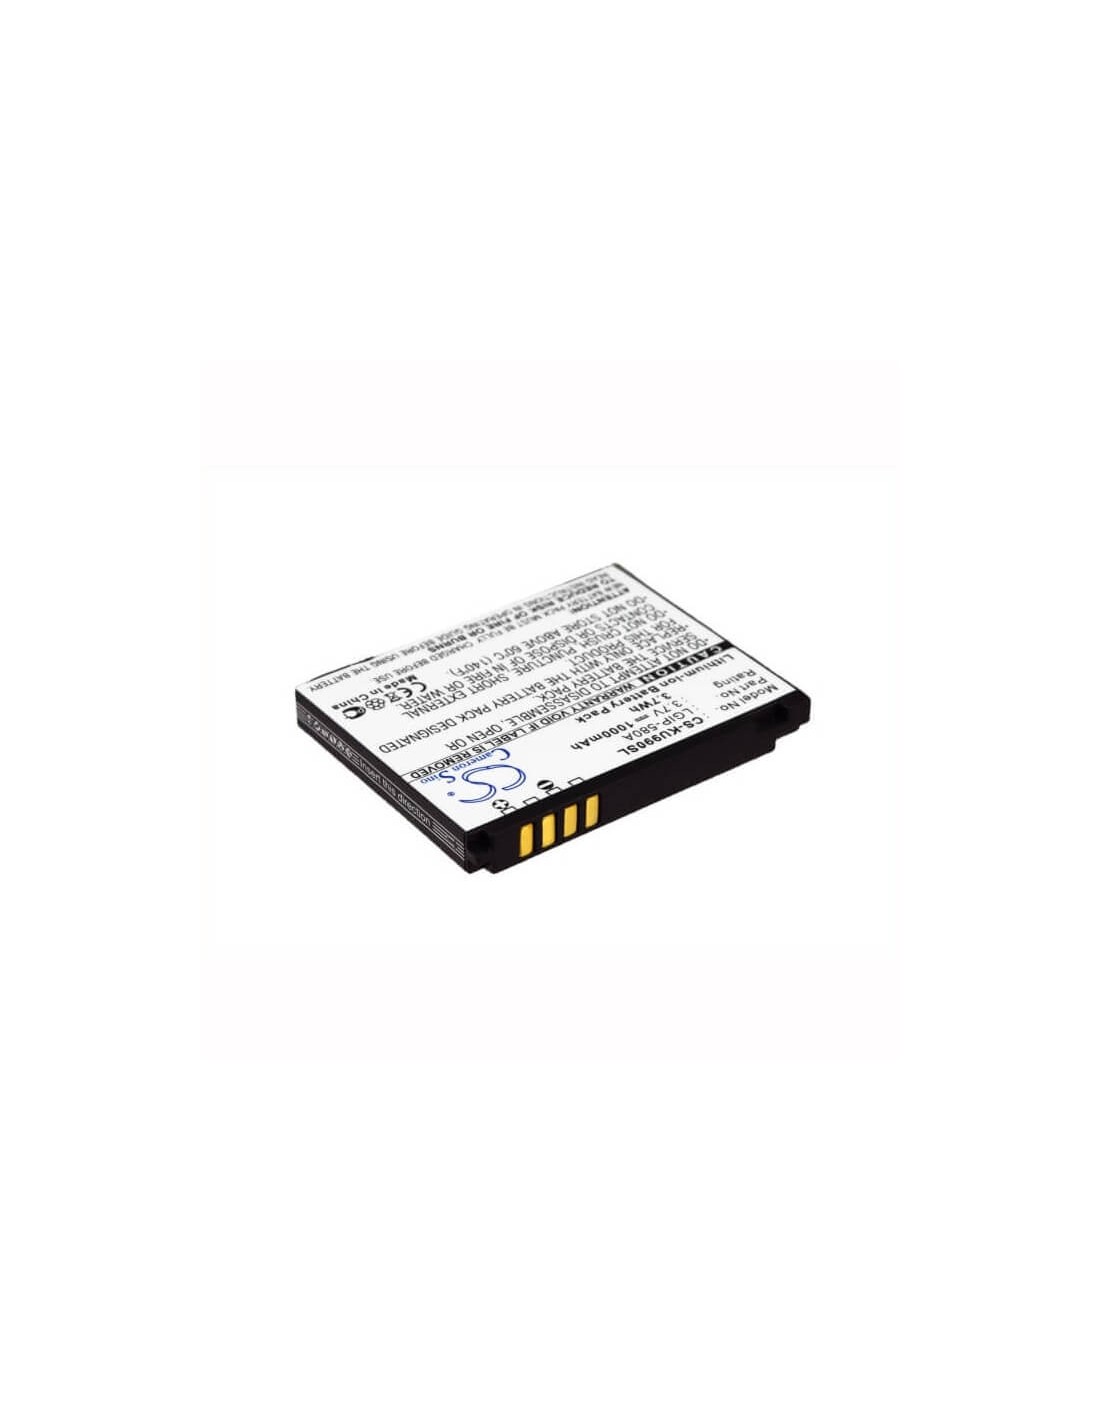 Battery for LG KU990, viewty KU990, CU920 3.7V, 1000mAh - 3.70Wh